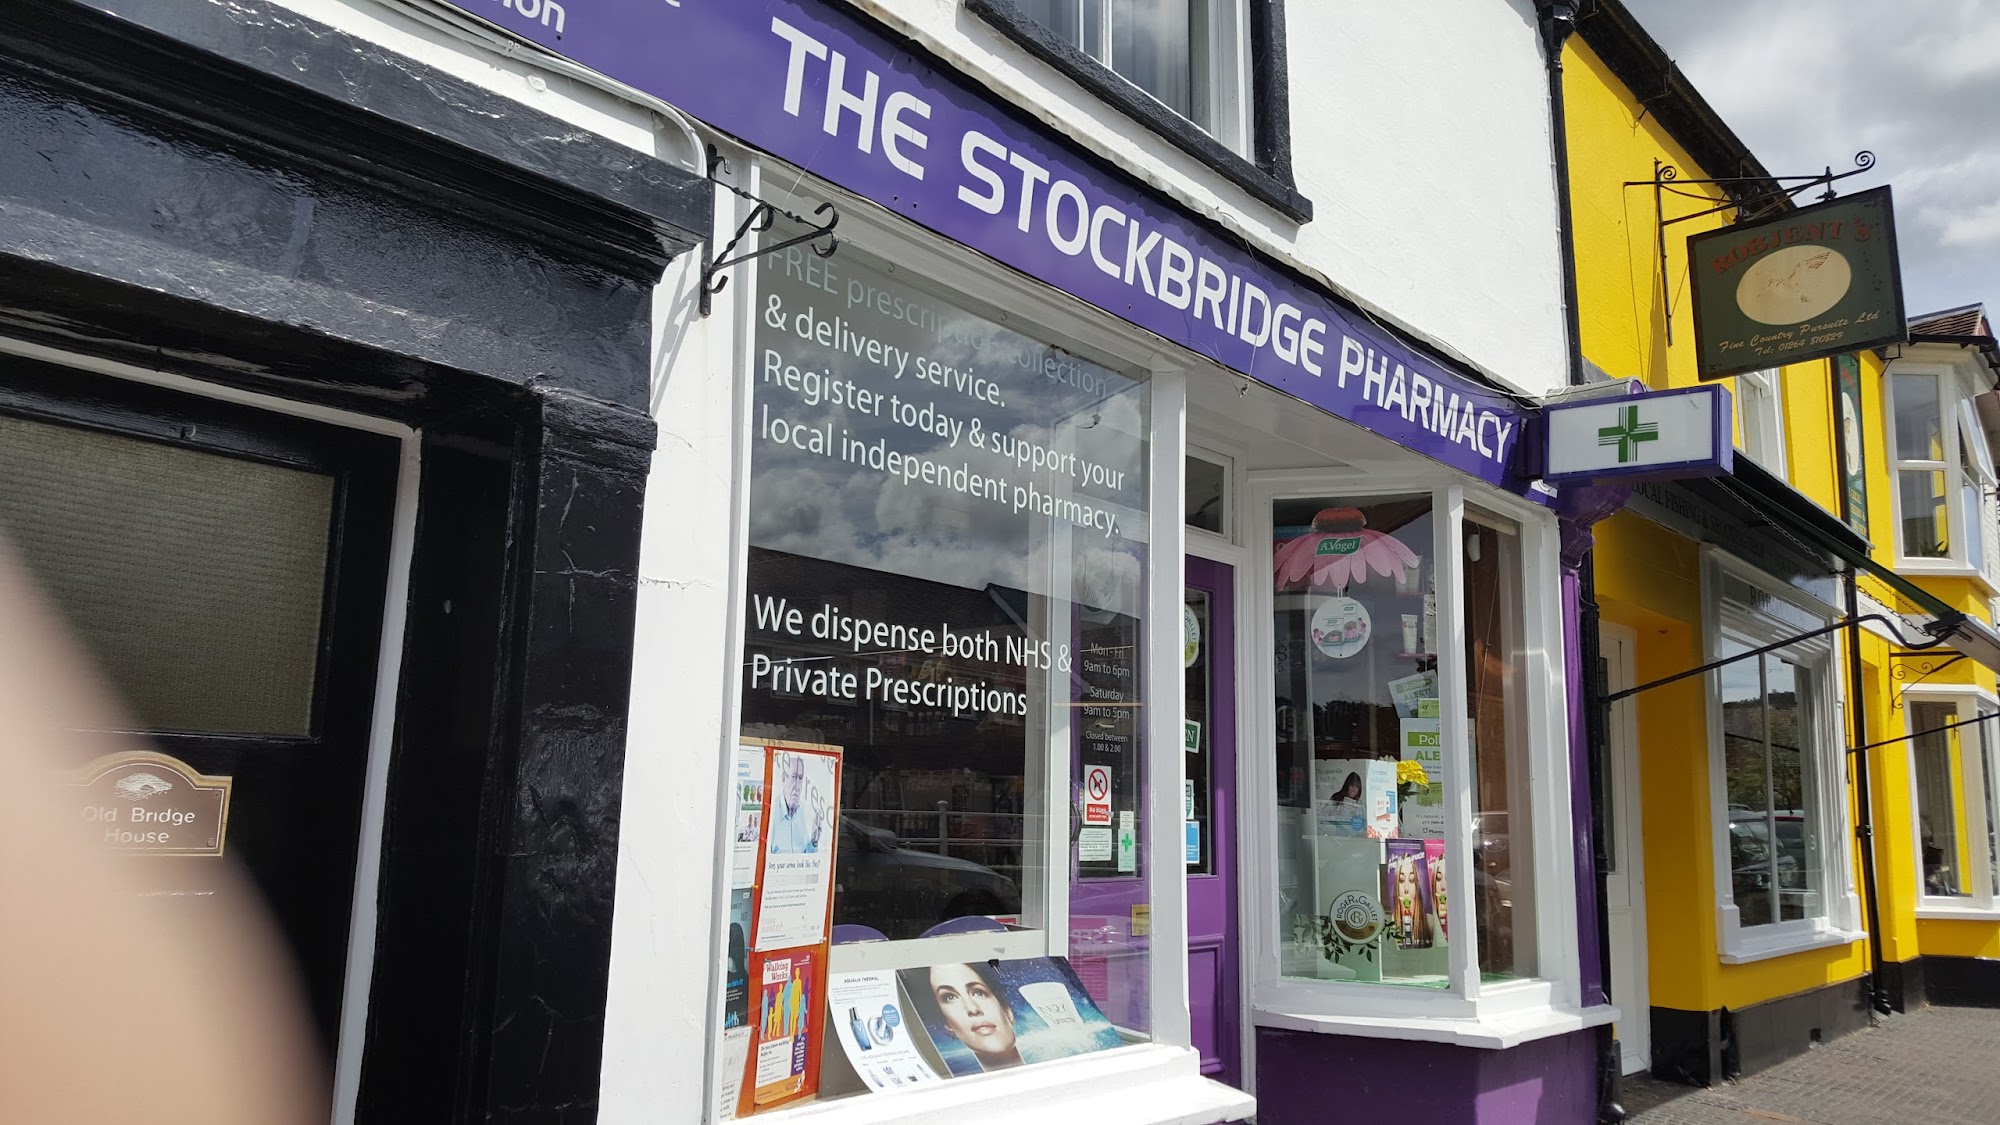 Stockbridge Pharmacy